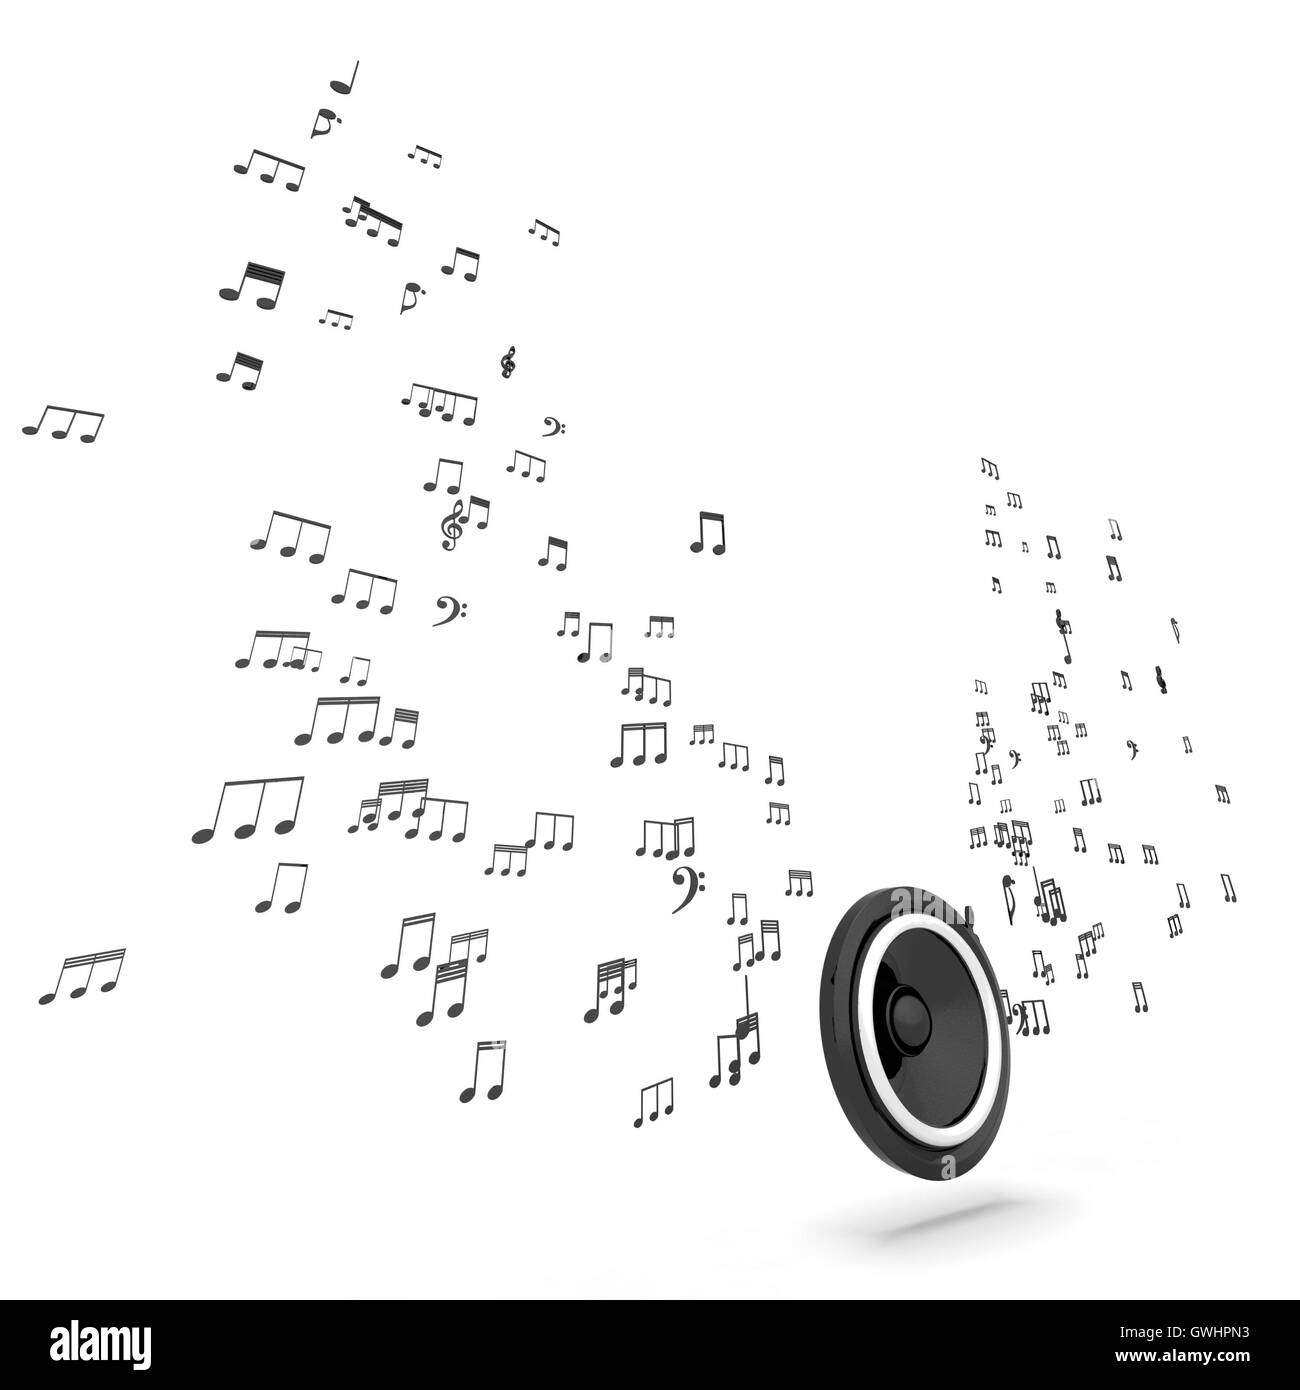 Altoparlante e Musical Hi-fi mostra musica audio o sistema audio Foto Stock